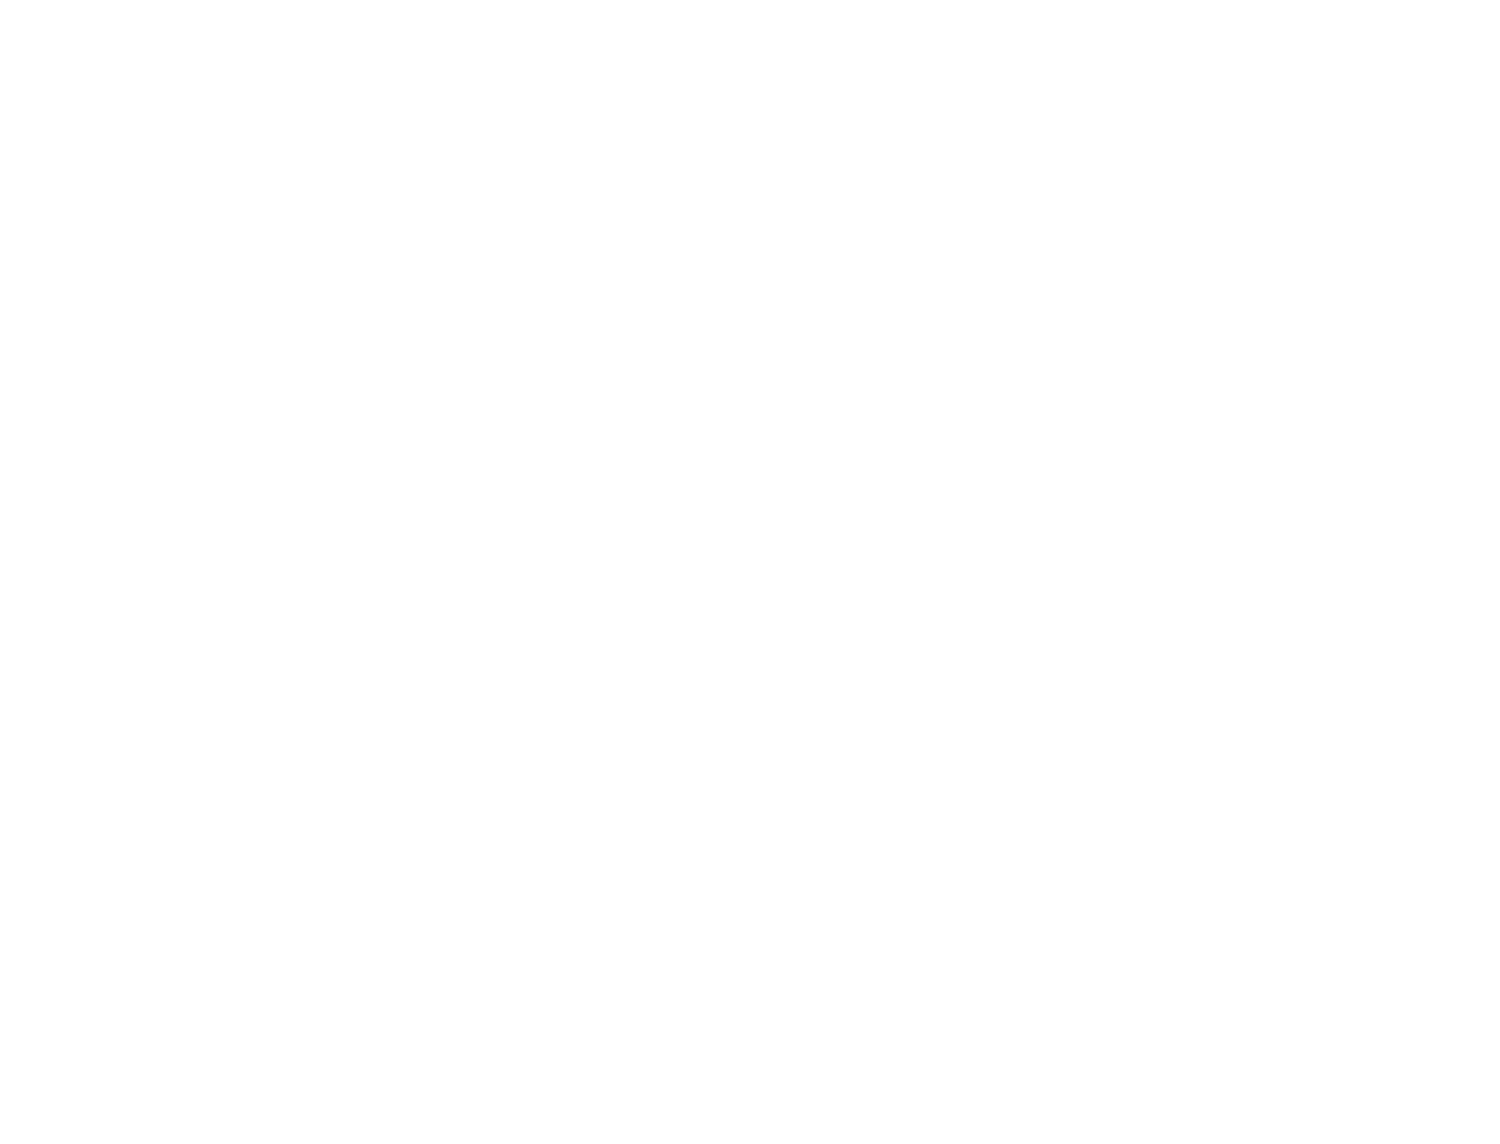 Channelside Nail Salon